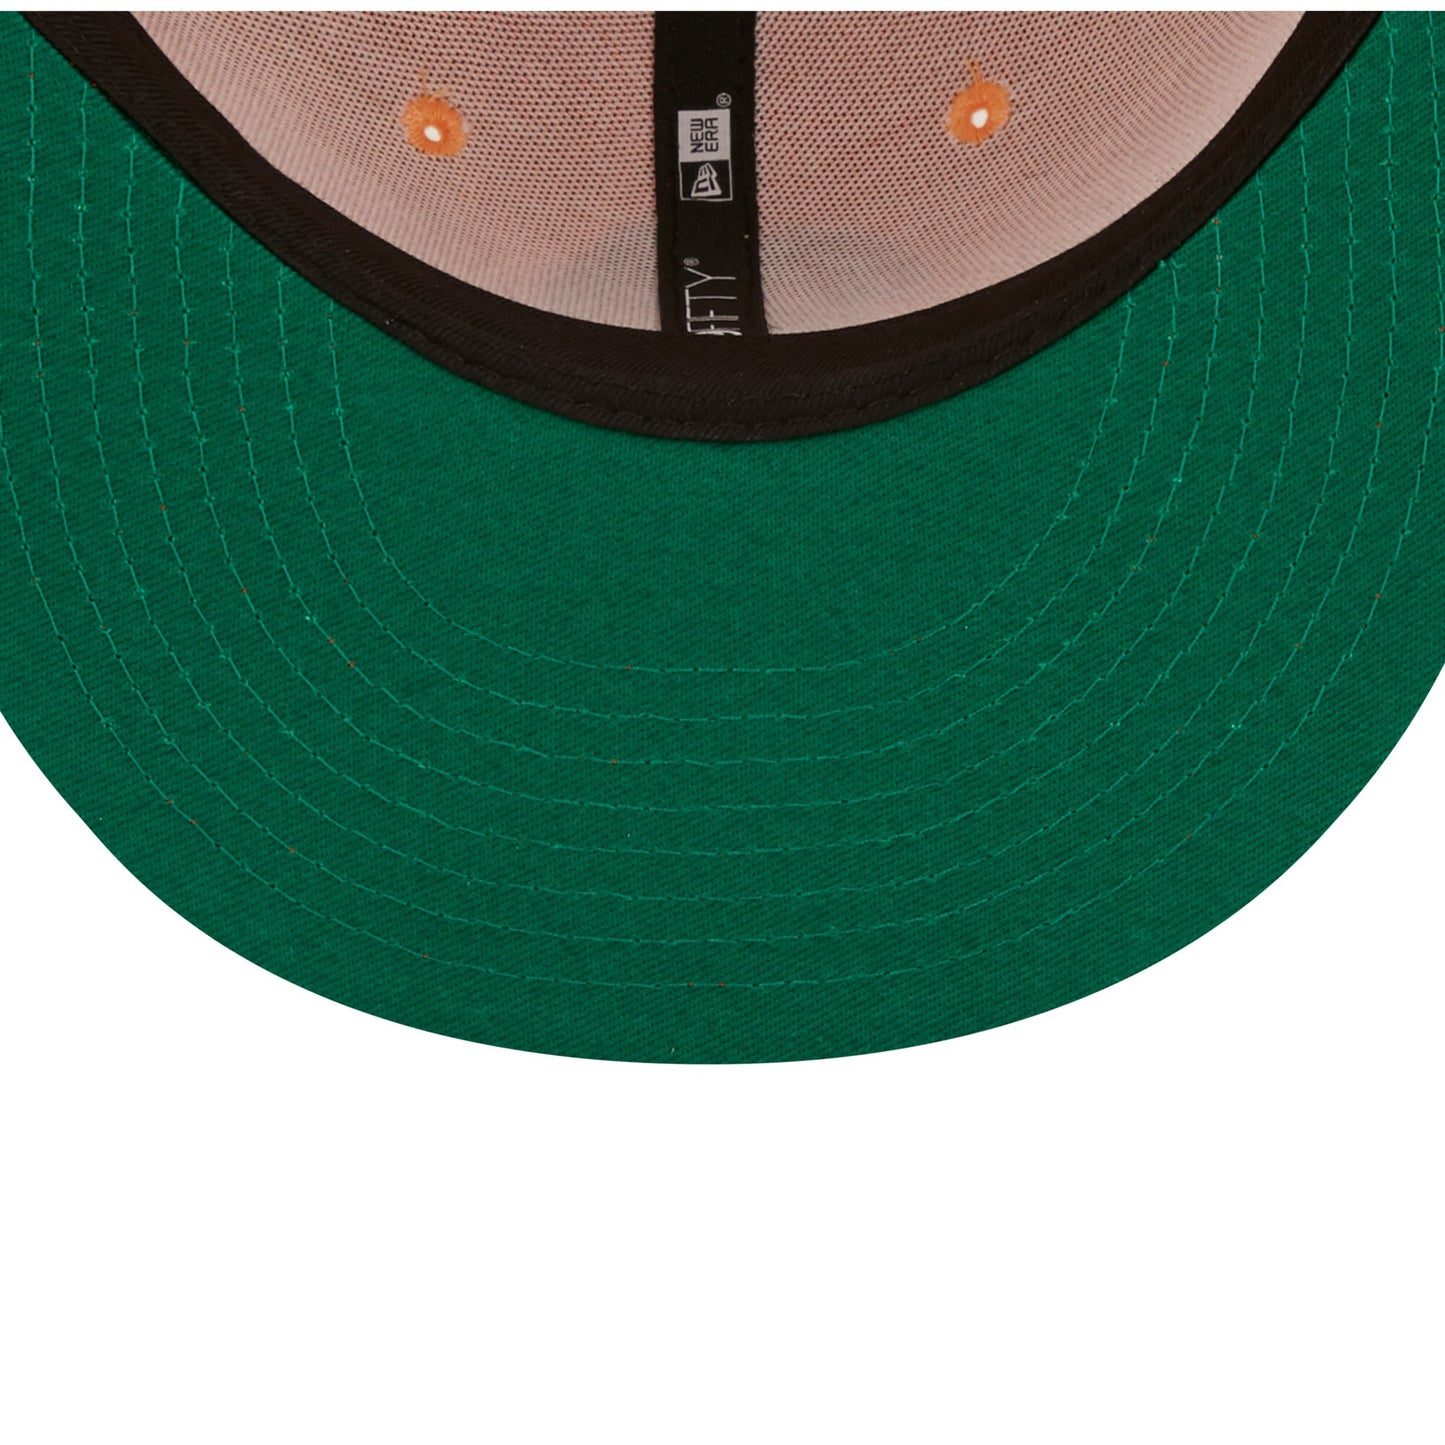 Tampa Bay Buccaneers Throwback Logo New Era 2 Tone League Flawless 9FIFTY Snapback Hat